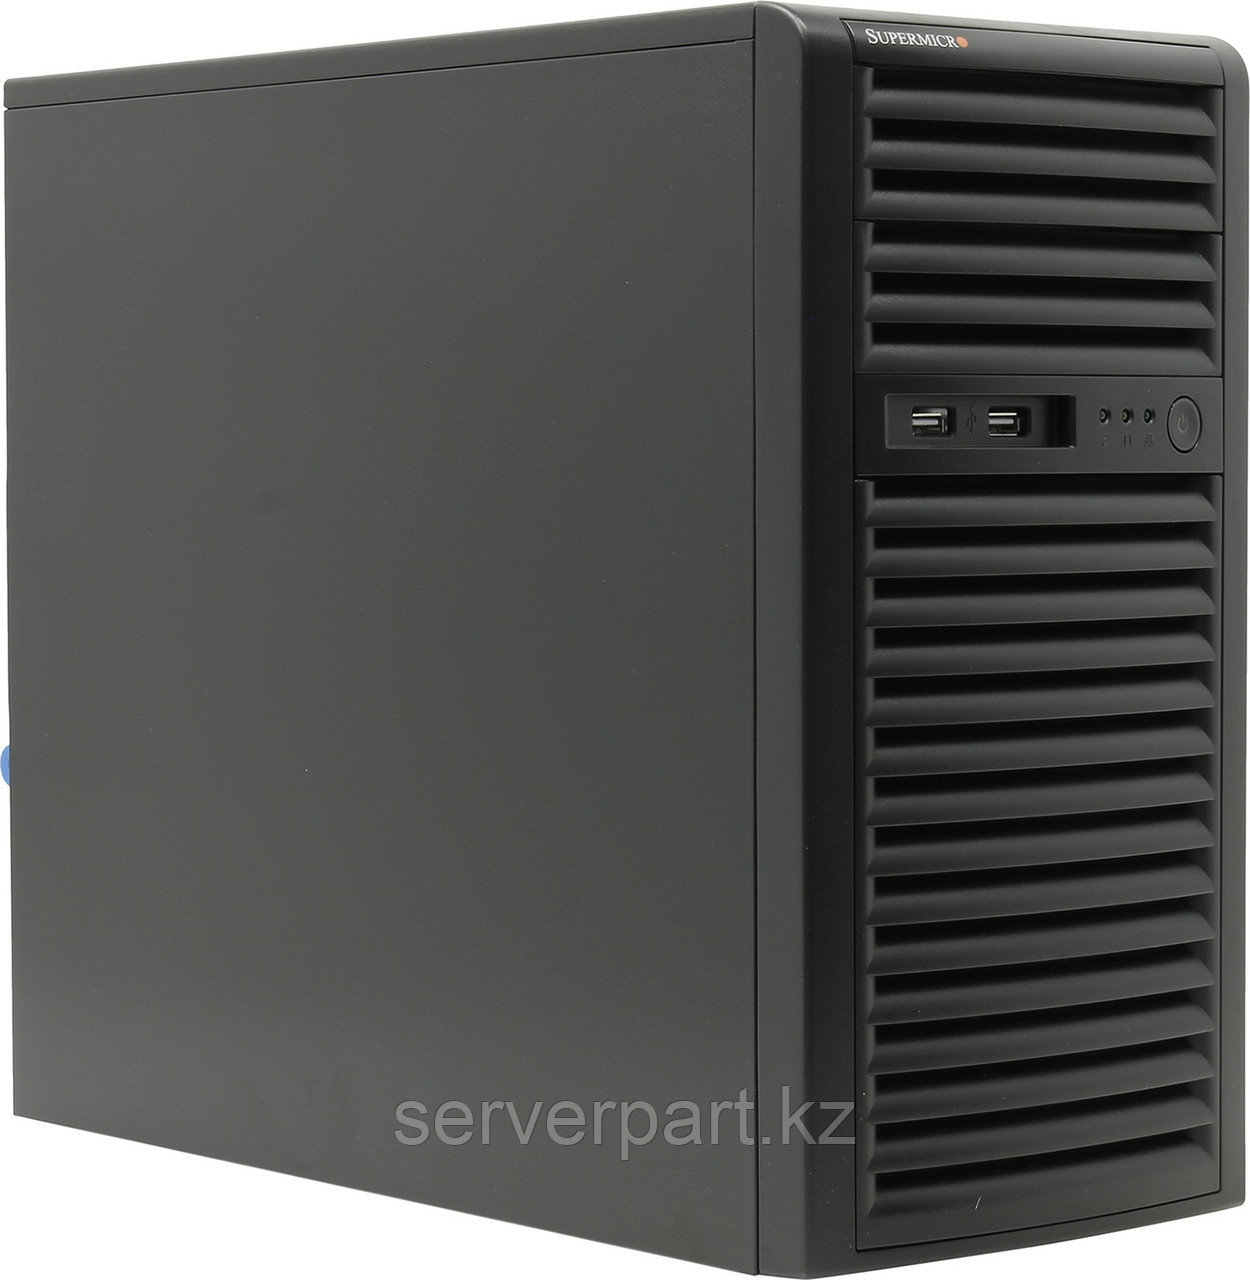 Сервер Supermicro SYS-5039C Tower 4LFF/4-core intel xeon E2124 3.3GHz/64GB UDIMM nECC/1x480GB SSD MU Hyb, фото 1